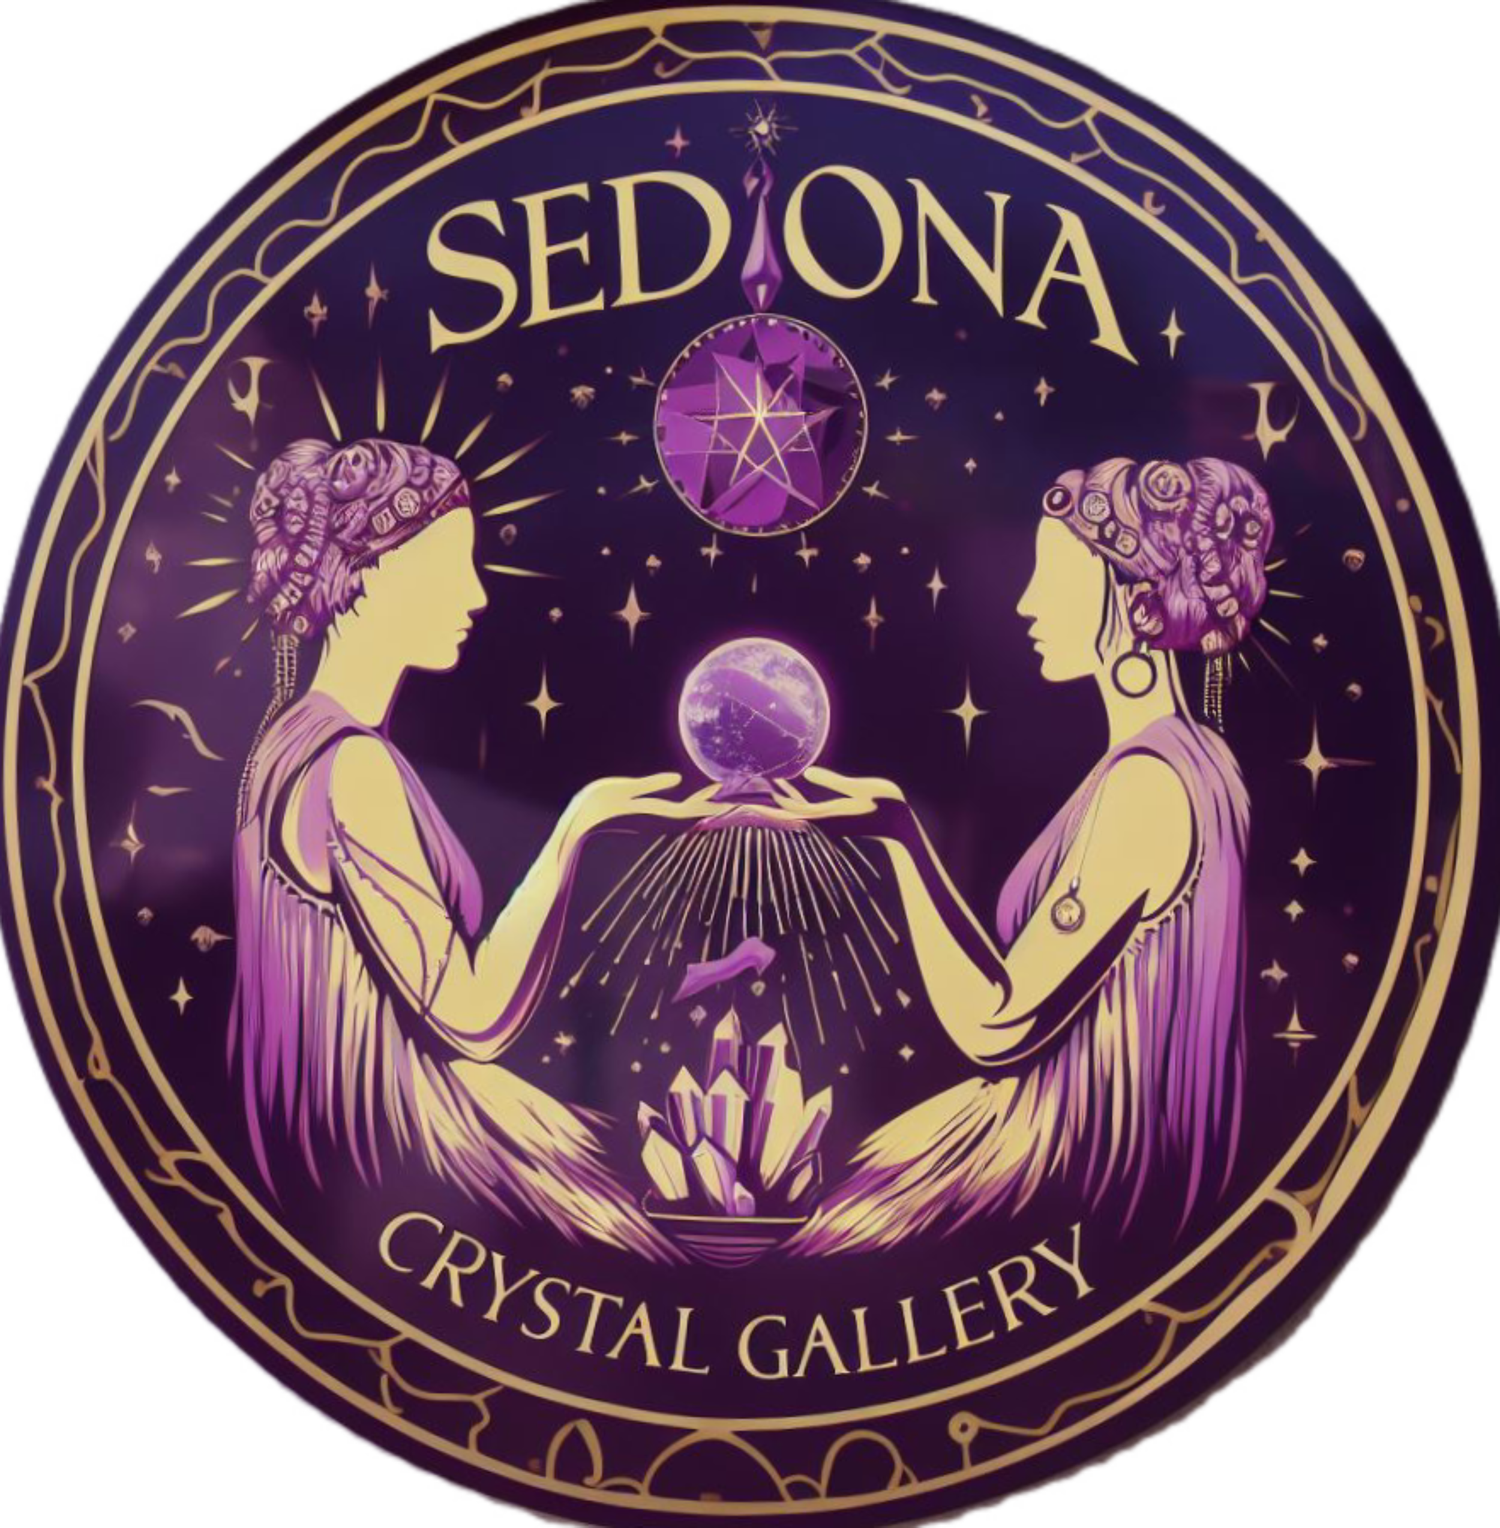 Sedona Crystal Gallery